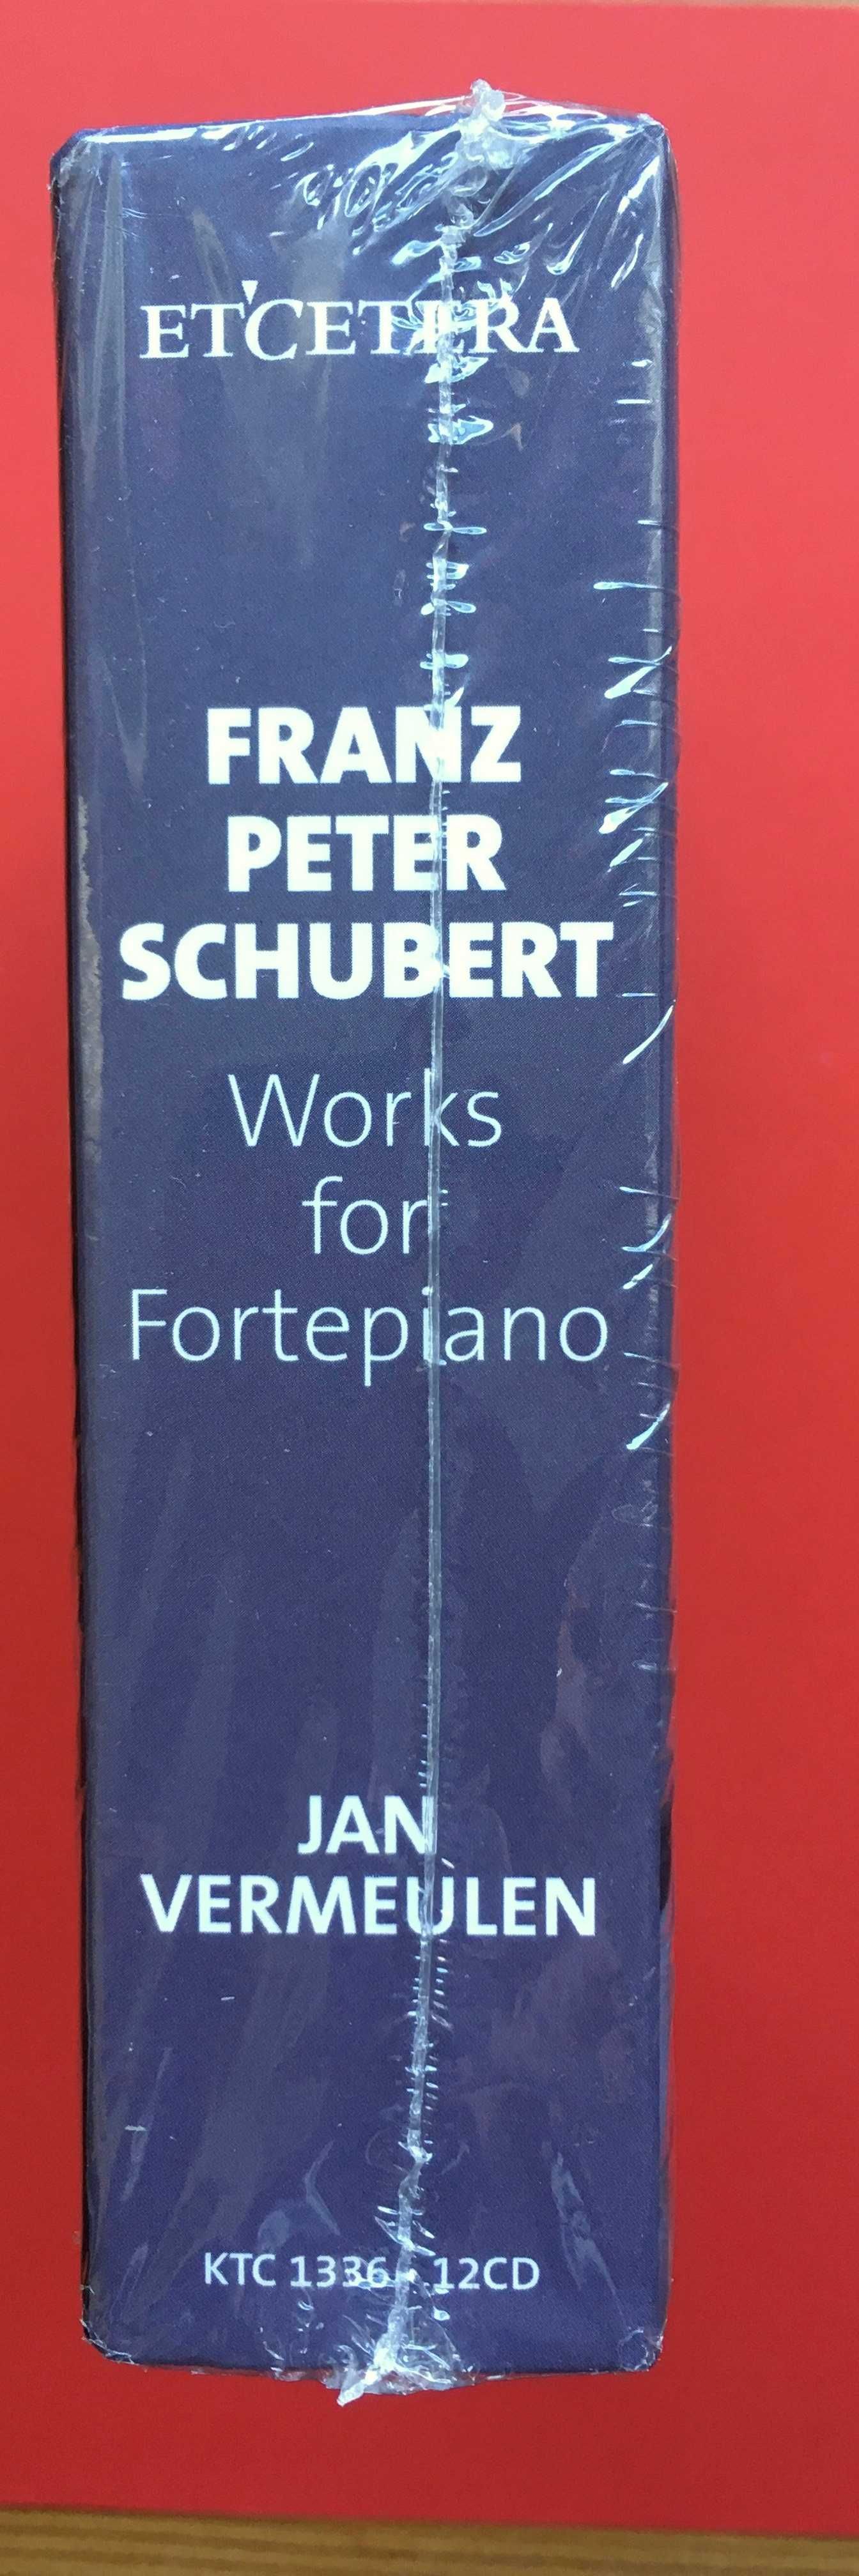 Schubert: Works for Fortepiano - Jan Vermeulen (Etcetera)